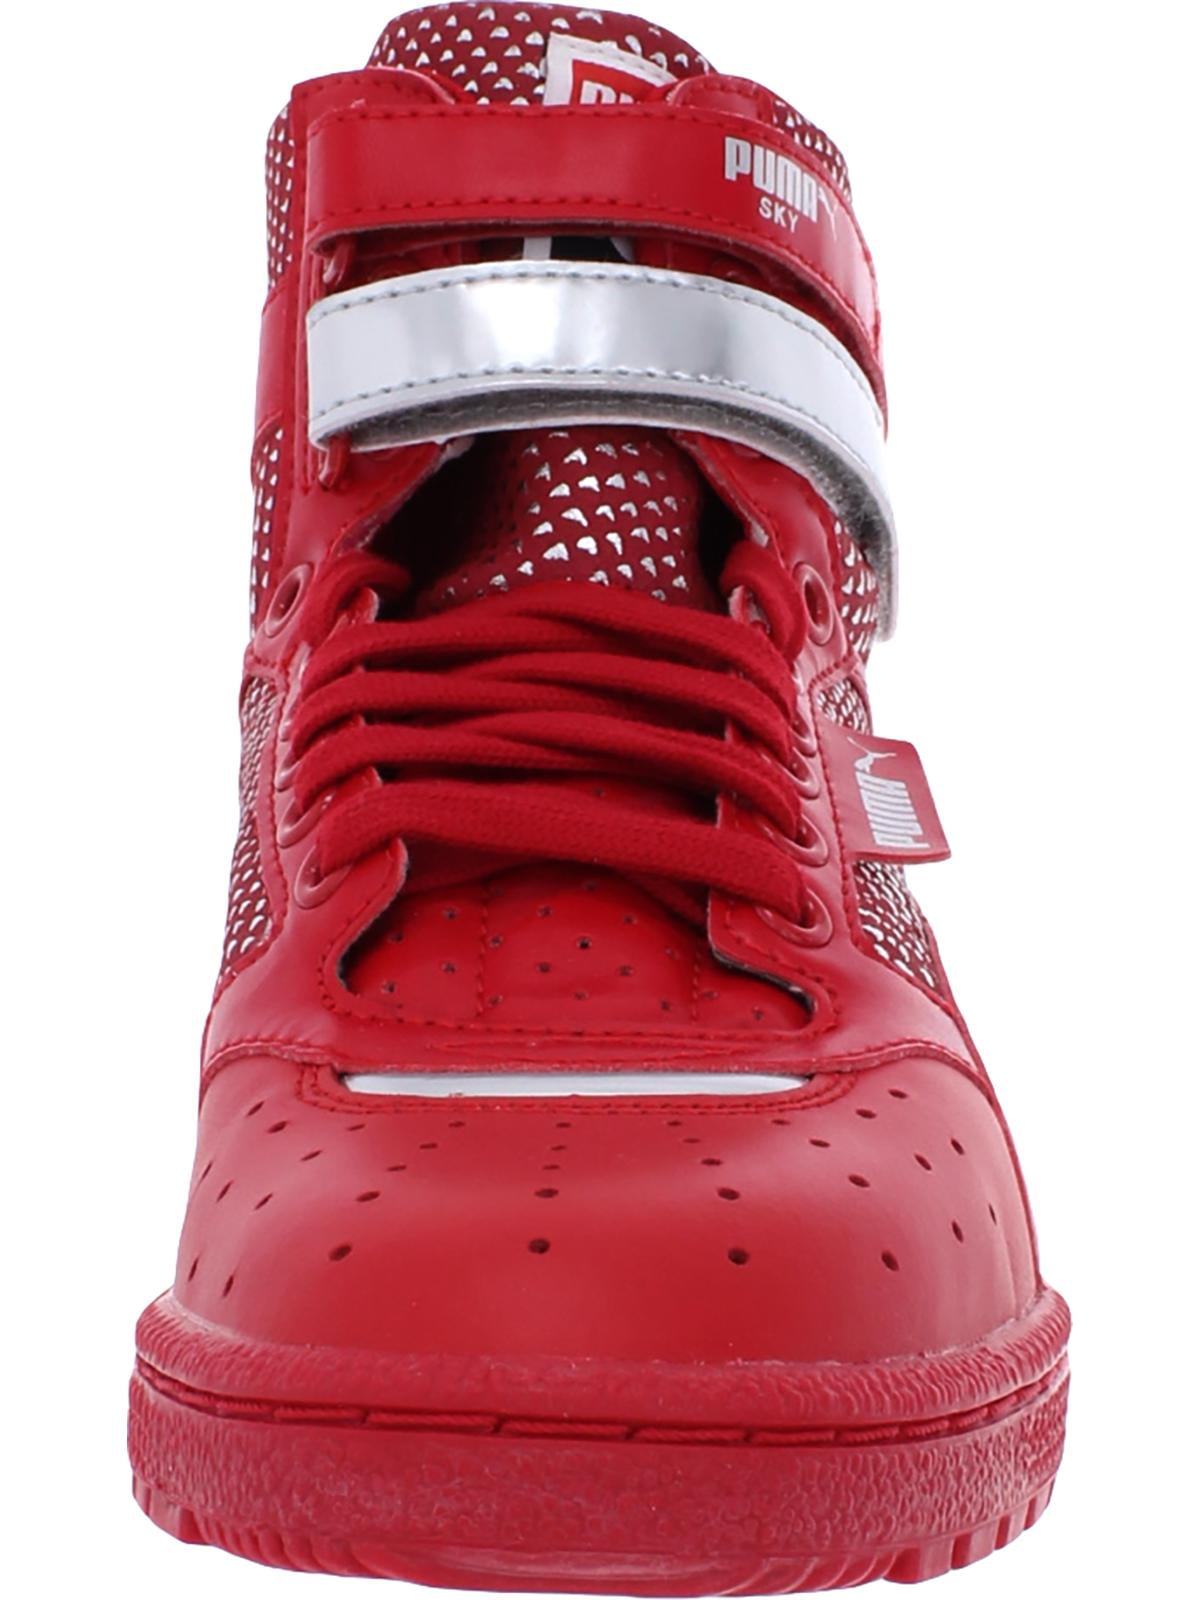 Puma Womens Sky II Hi Futur Minimal Leather High Top Sneakers Red Medium (B,M) - Walmart.com